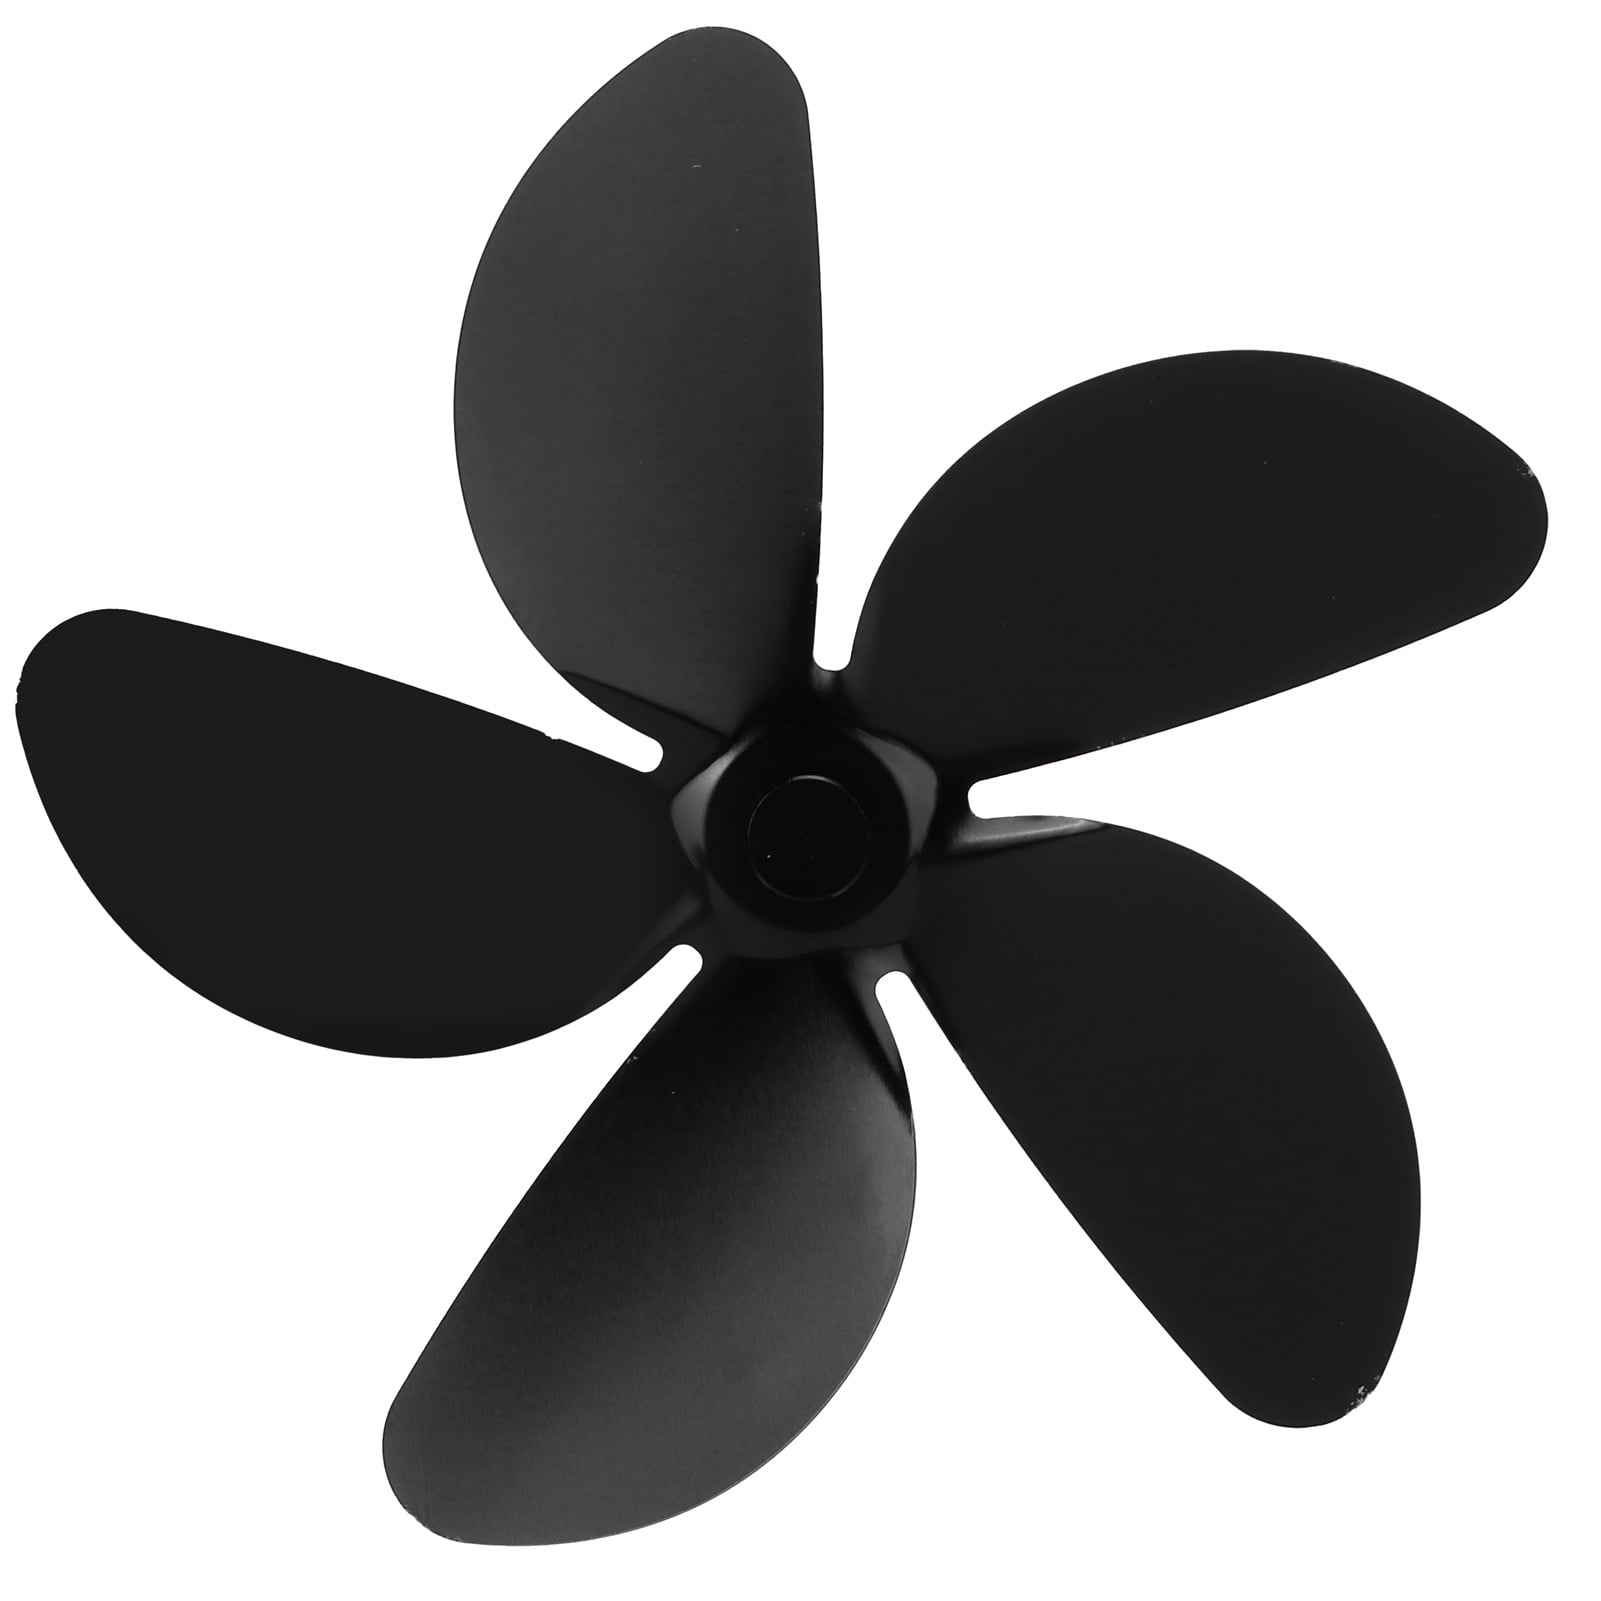 5 Mini Plastic Fan Blade Motor Hair Dryer Hairdryer Six Leaves Exhaust Parts 2" 